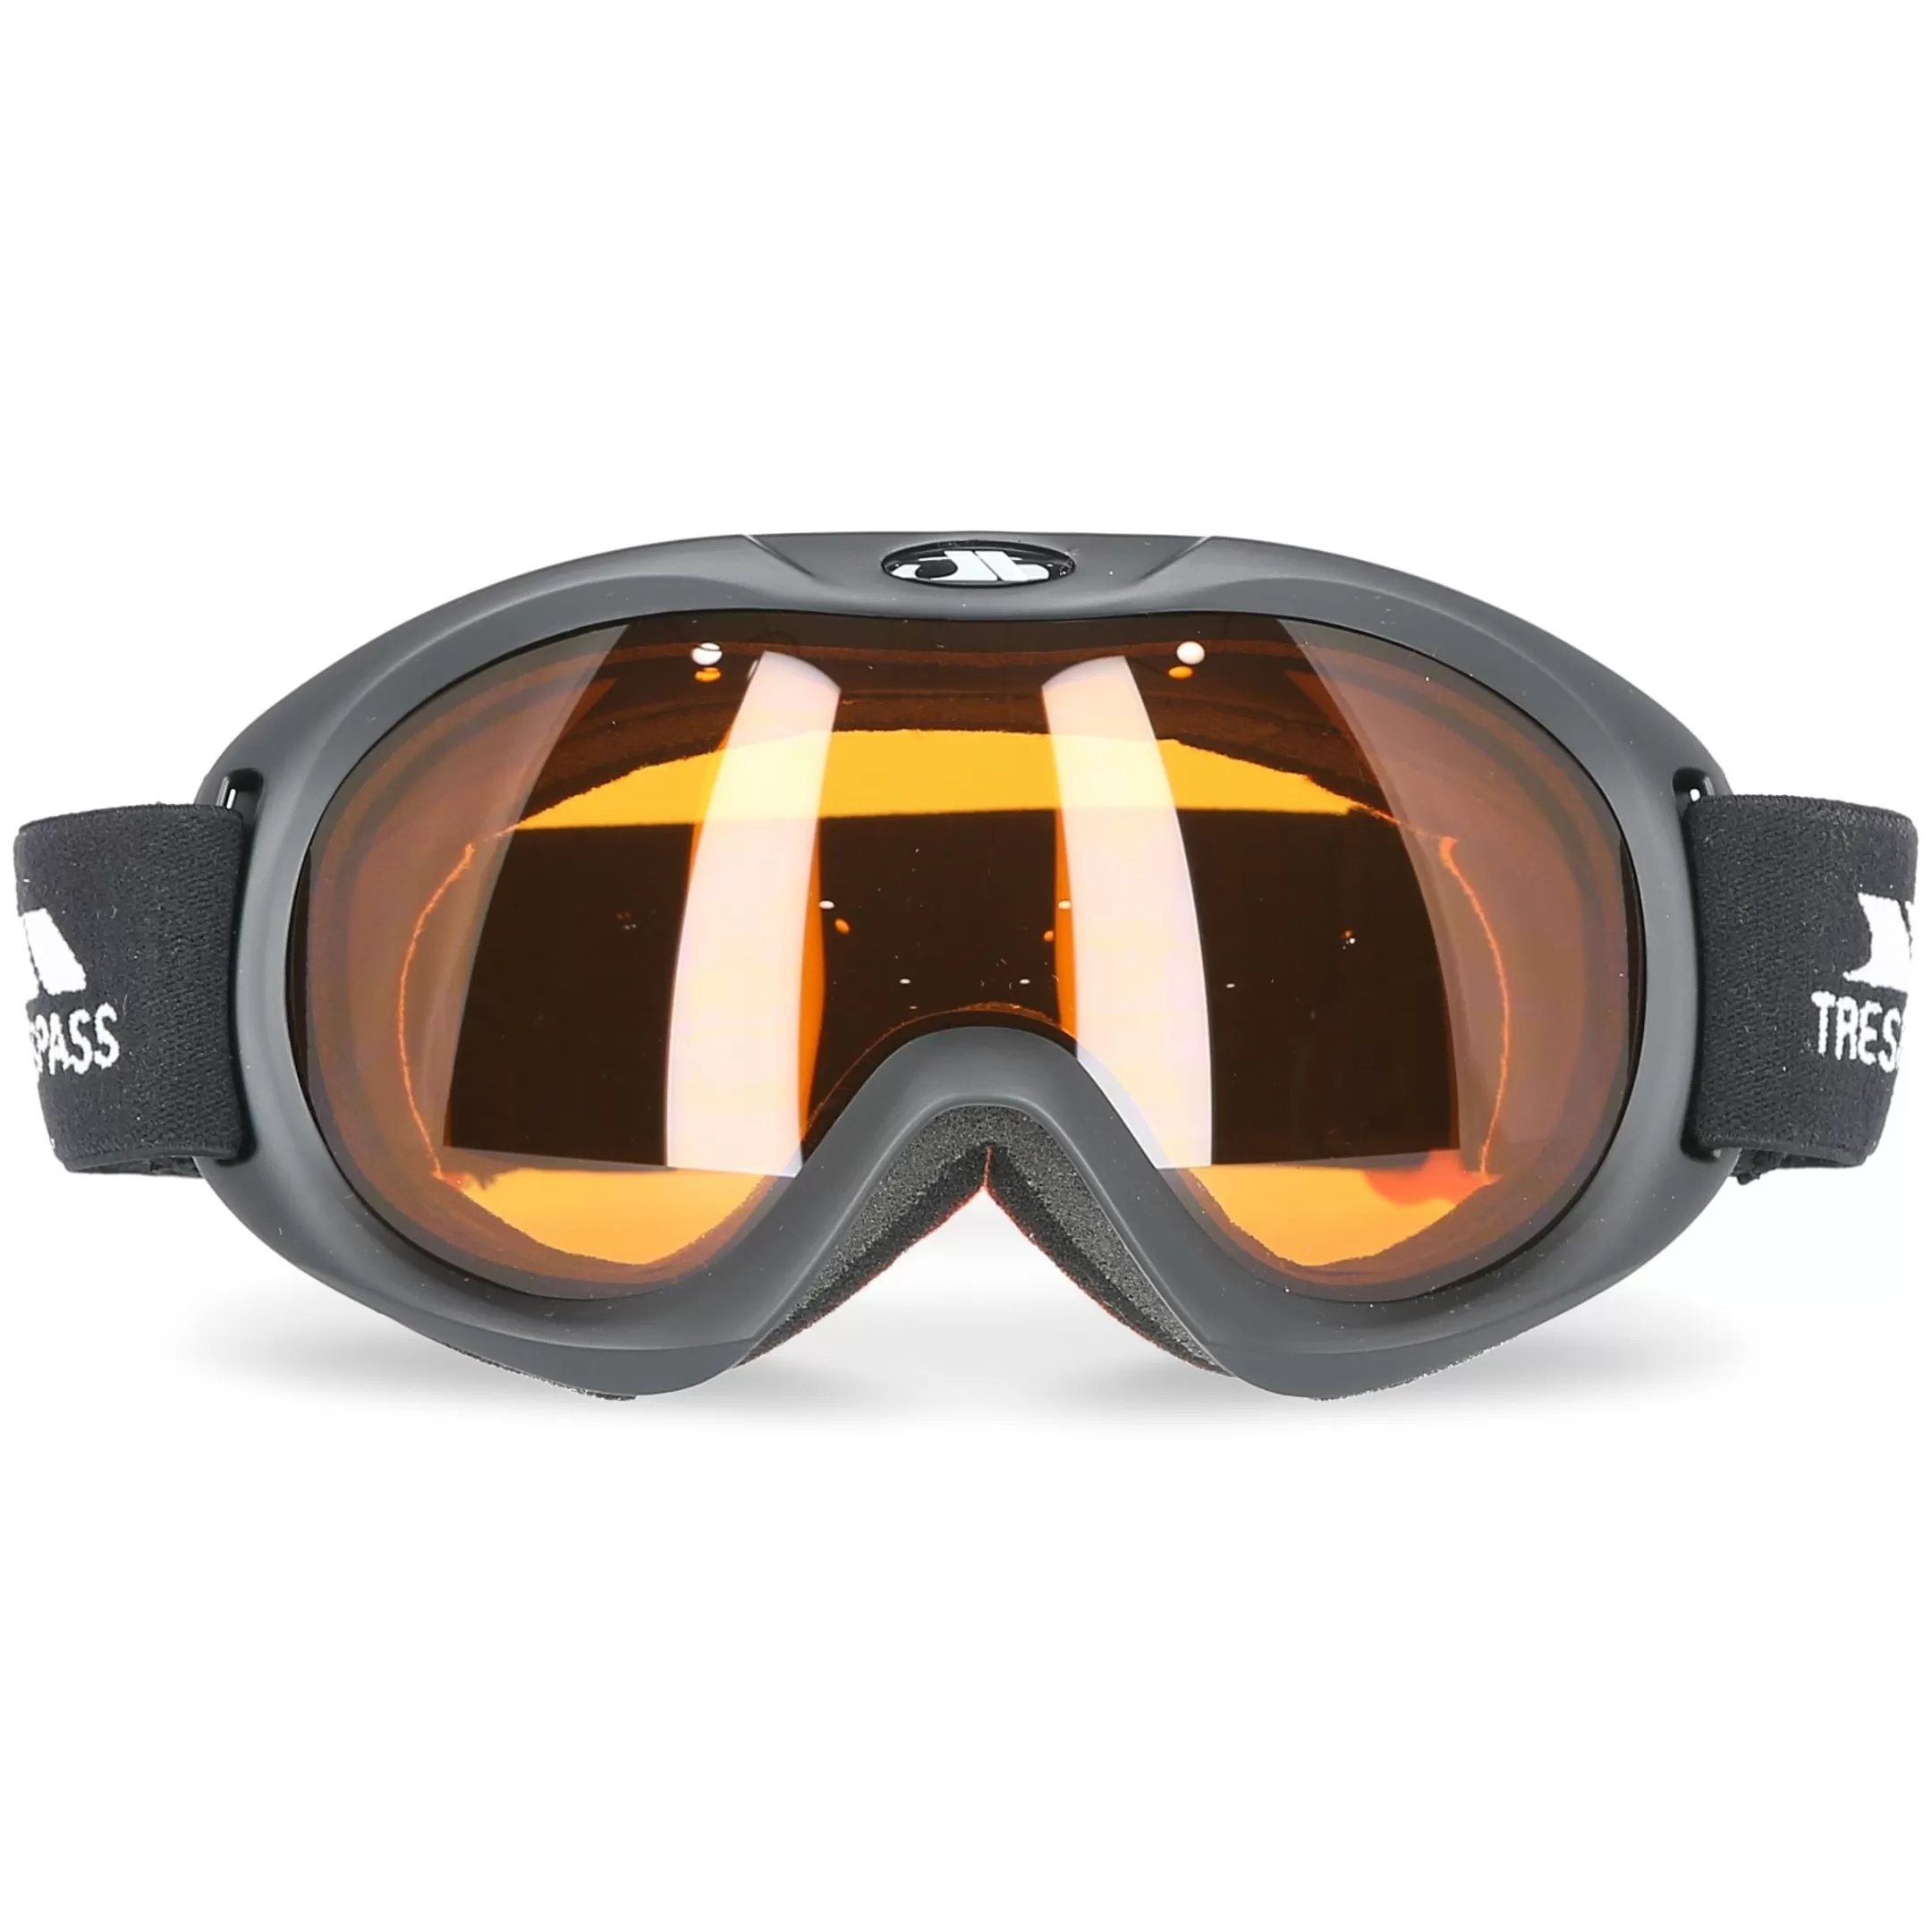 Hijinx Kids' Ski Goggles | Trespass New